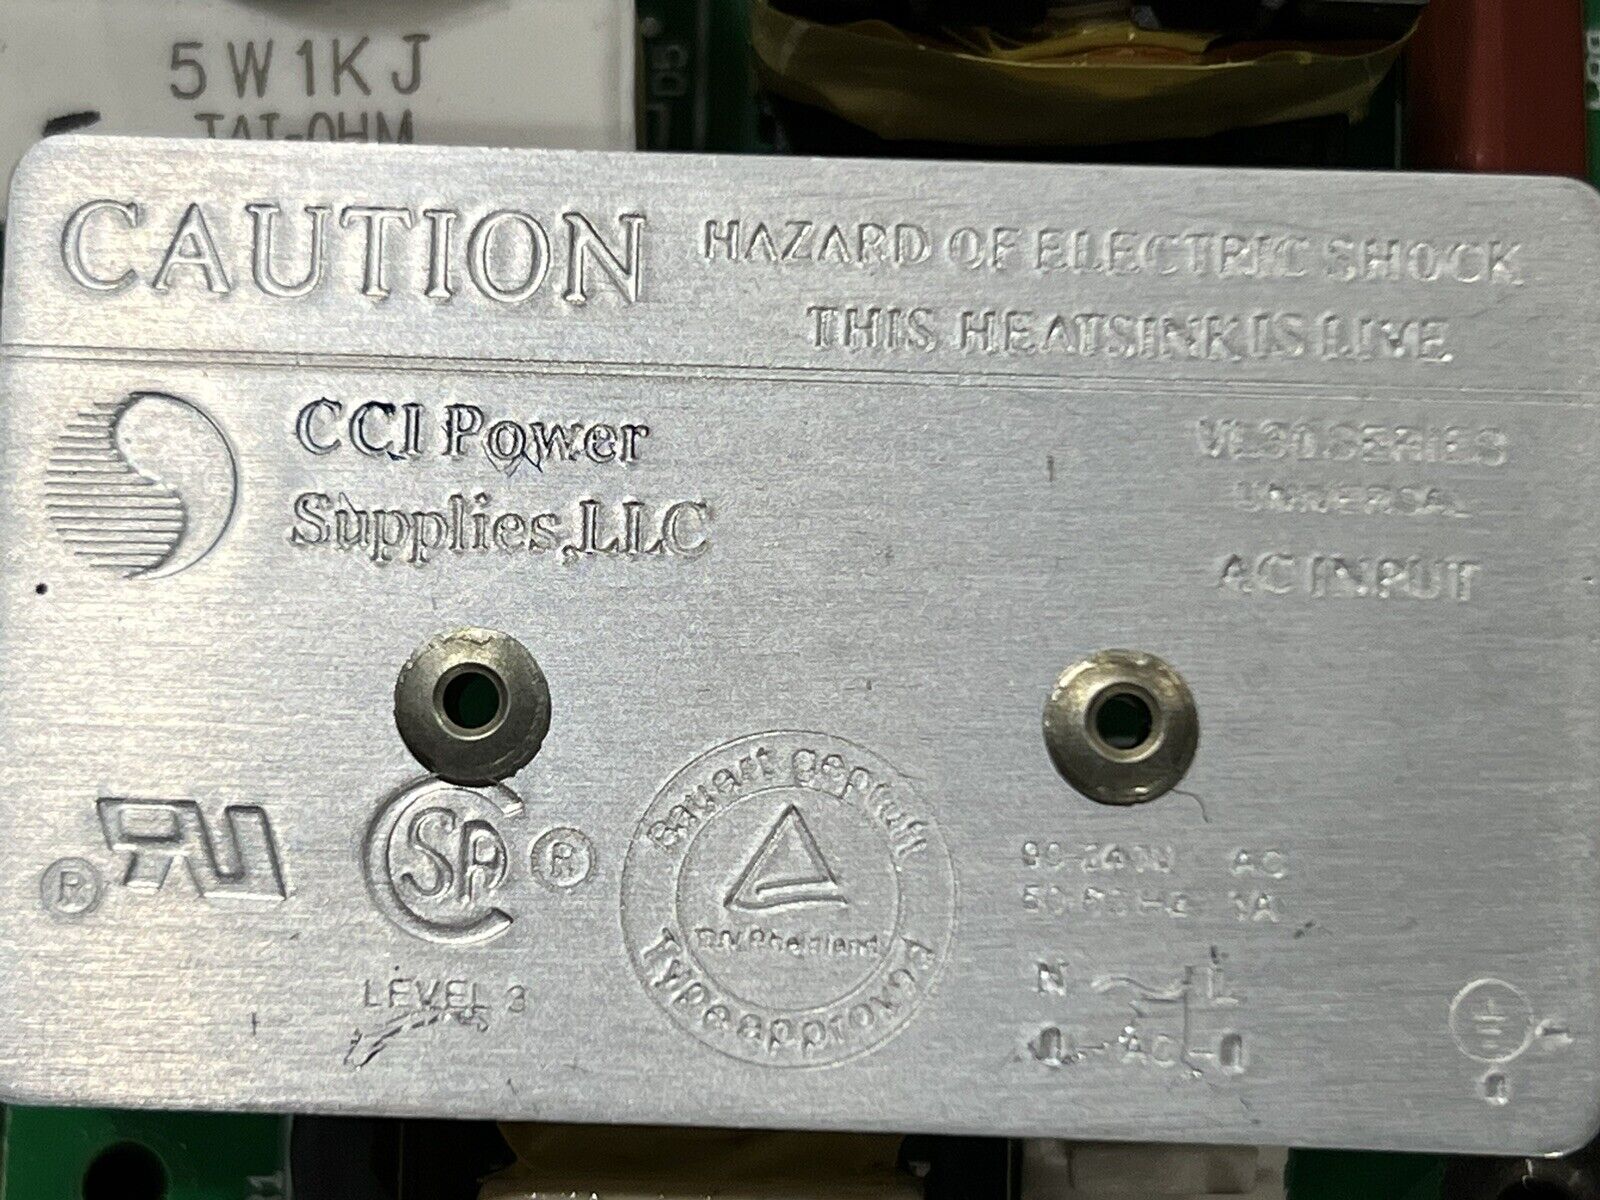 CCI POWER power supply VL30 SERIES